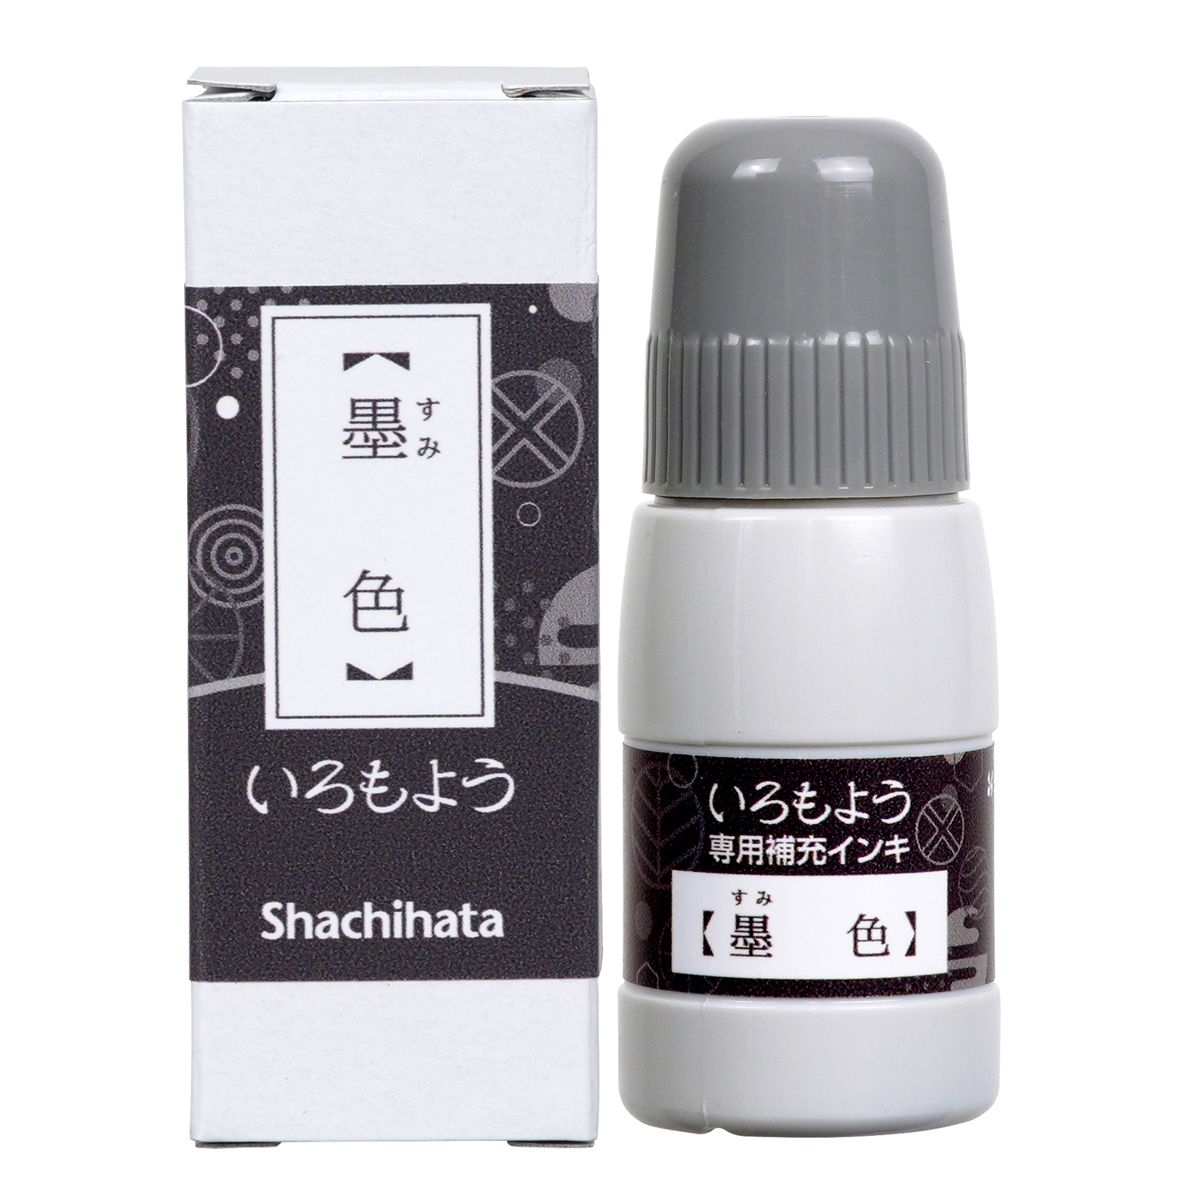 REFILL: Shachihata Iromoyo Ink Refill Bottle - Black - Sumi-iro